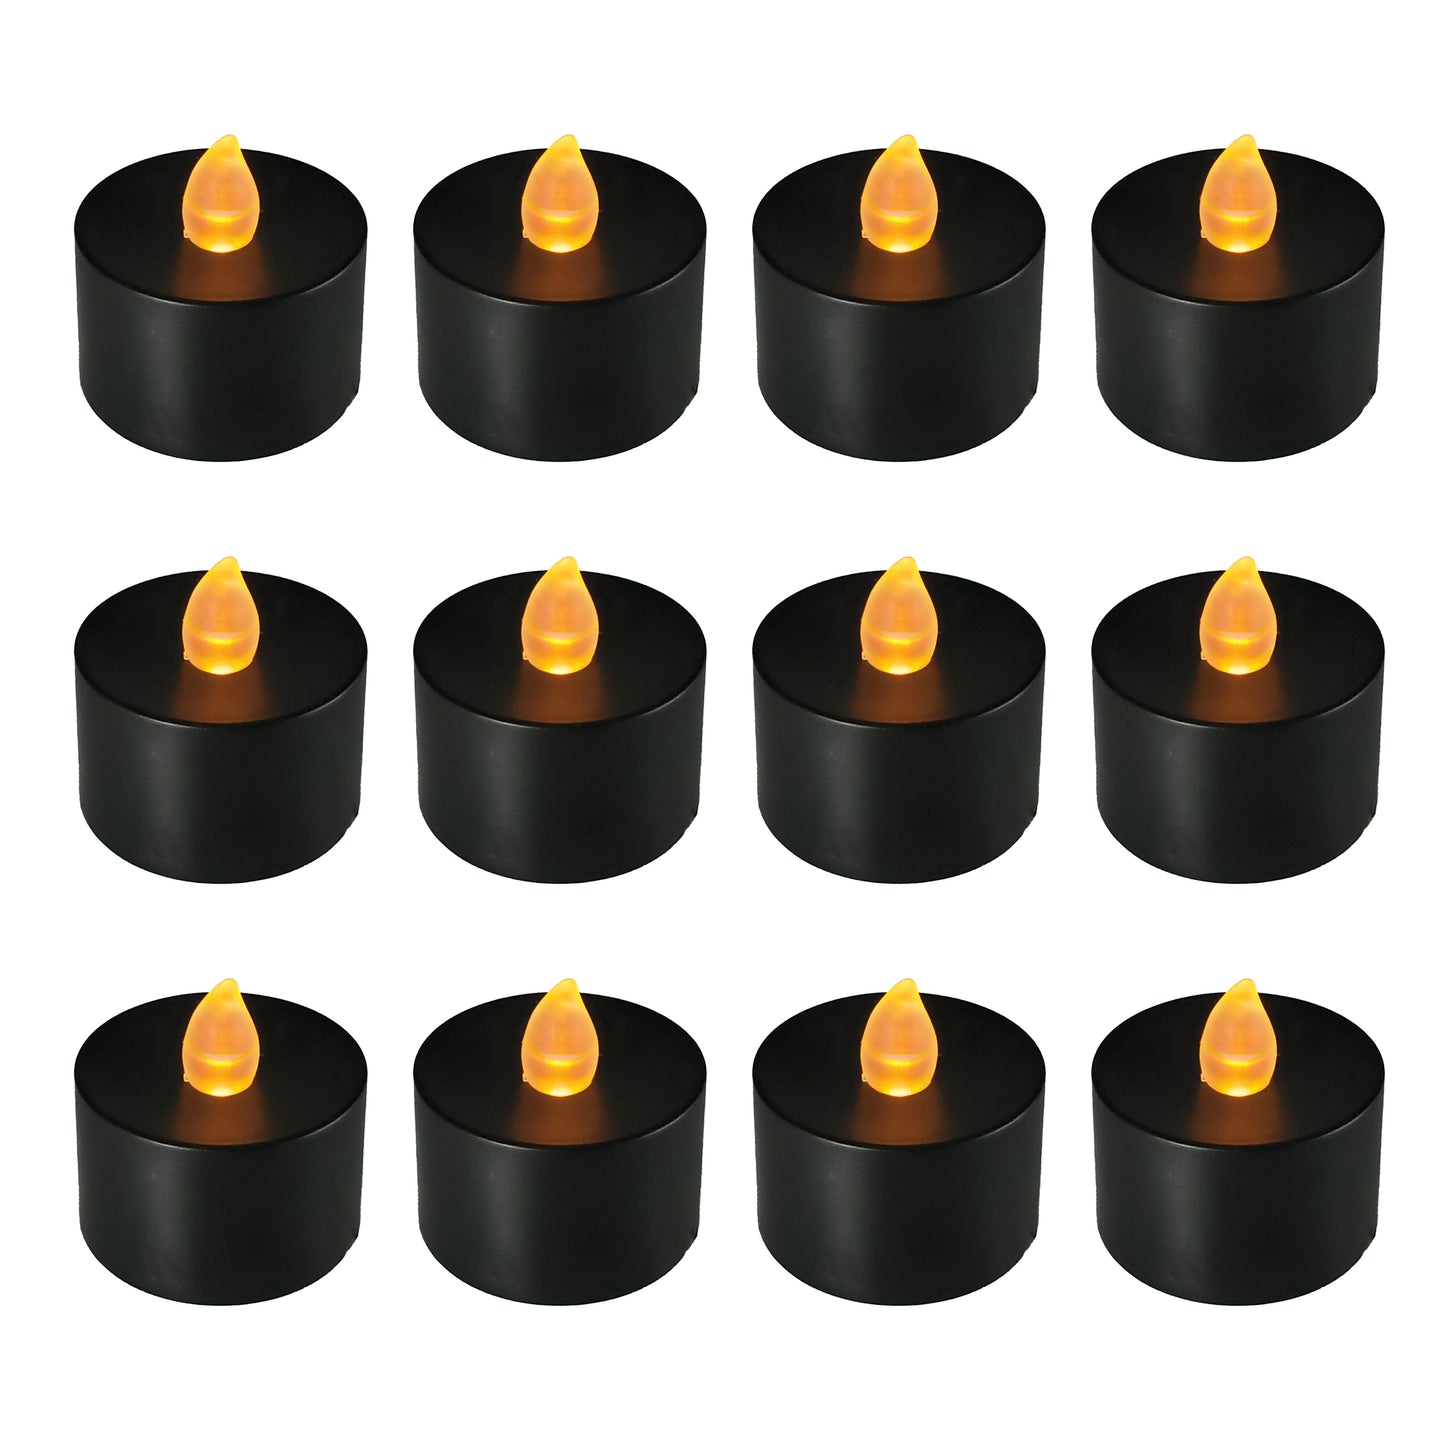 Battery Powered LED Flickering Tealights - Set of 12 - Black